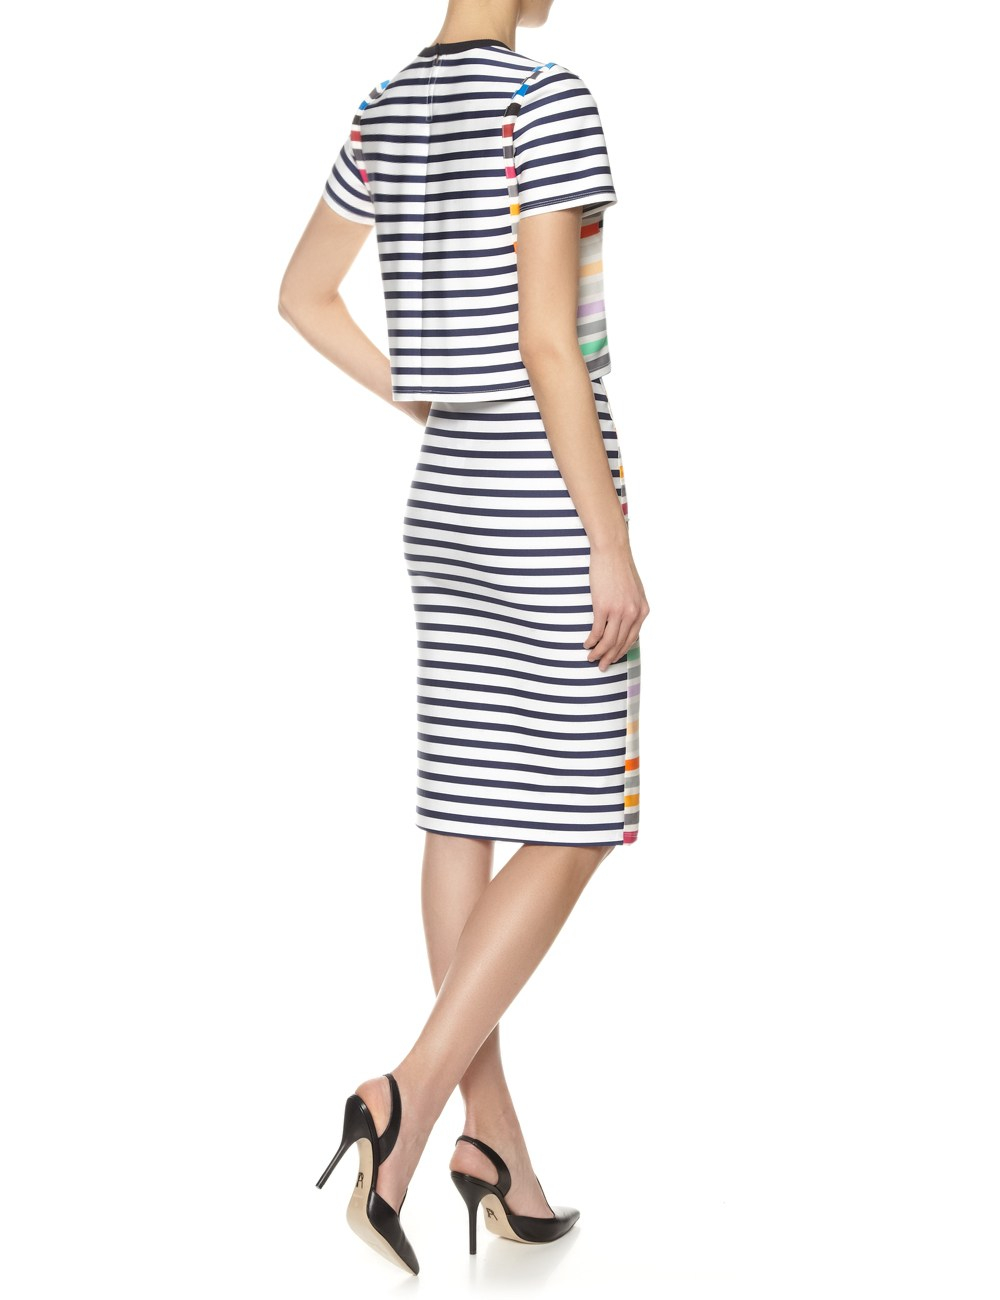 Tanya taylor Multi Stripe Peggy Skirt in Multicolor (Multi) | Lyst